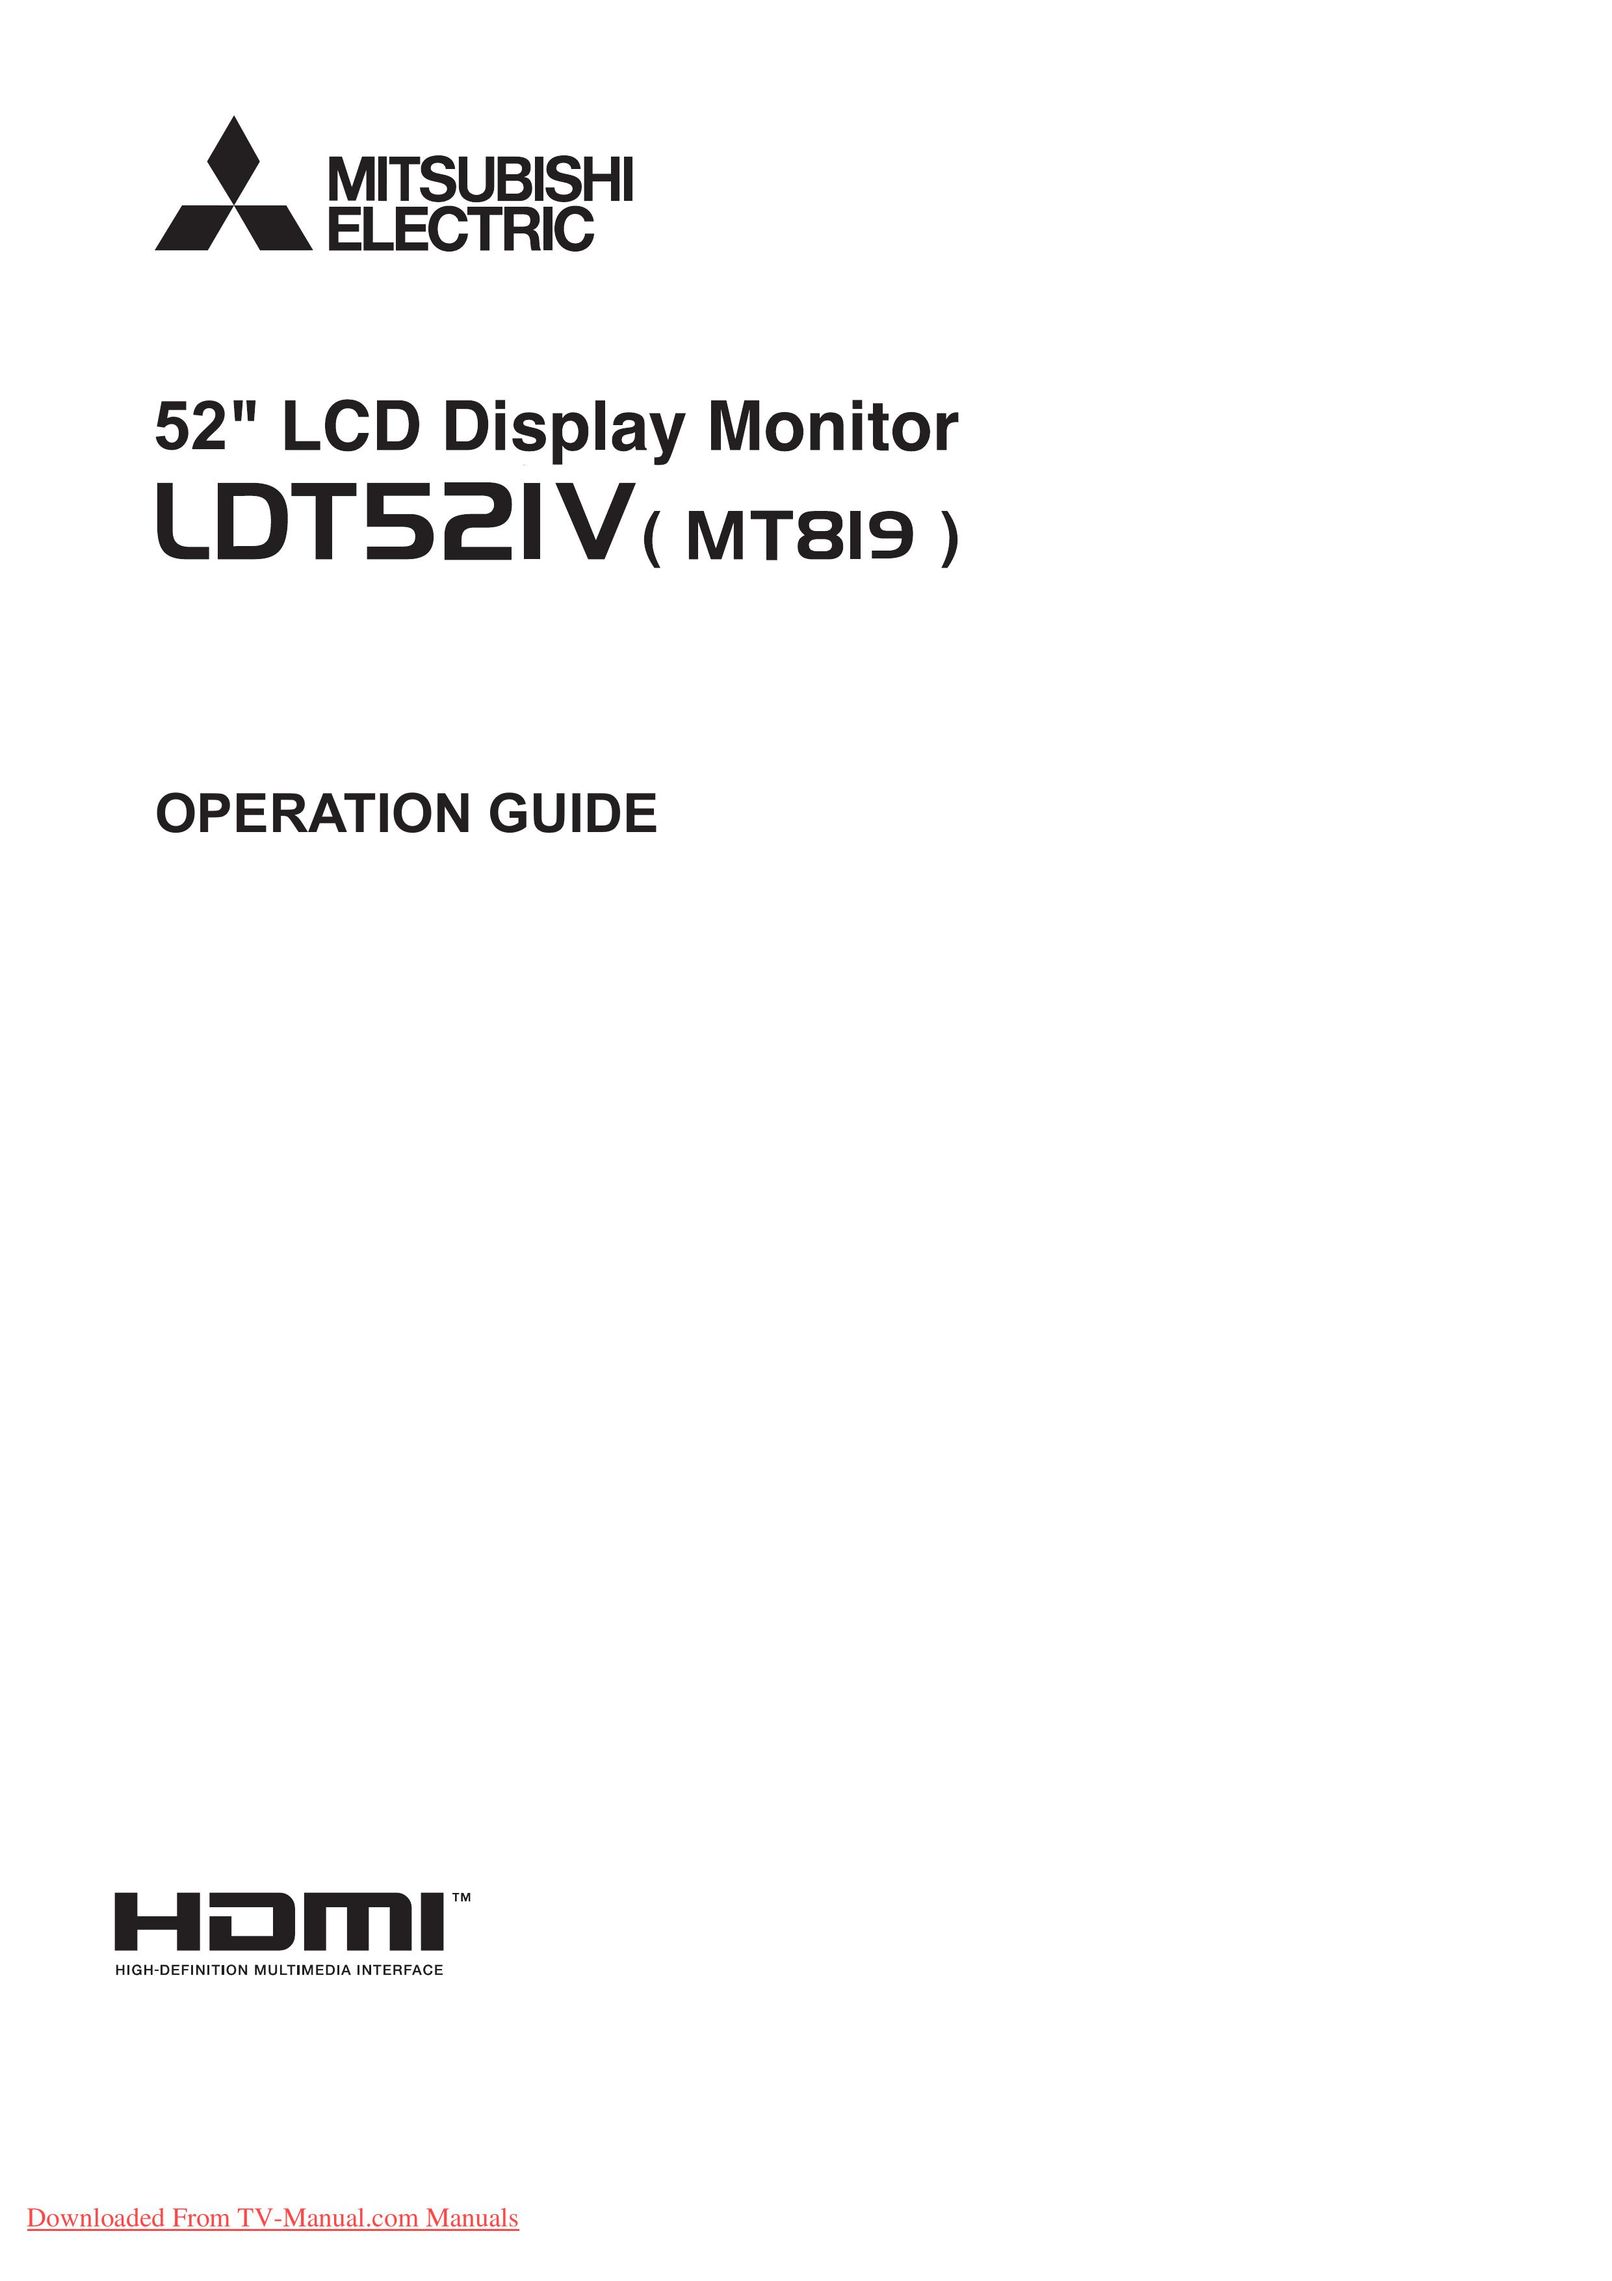 Mitsubishi Electronics LDT52IV (MT819) Car Video System User Manual